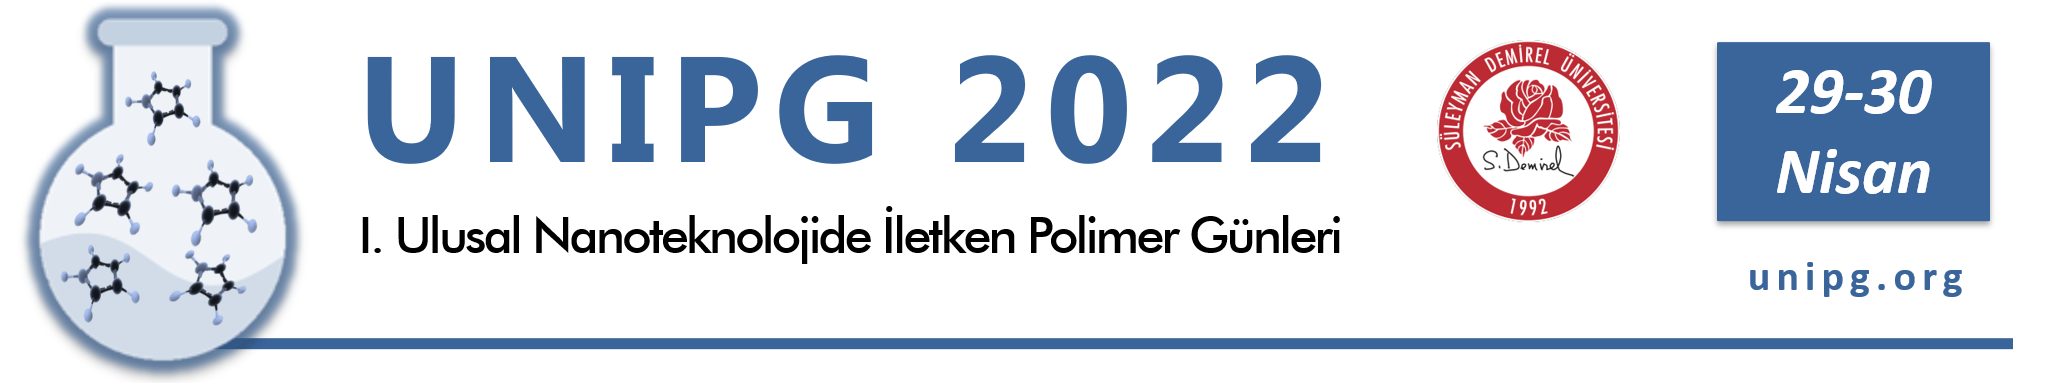 UNIPG 2022